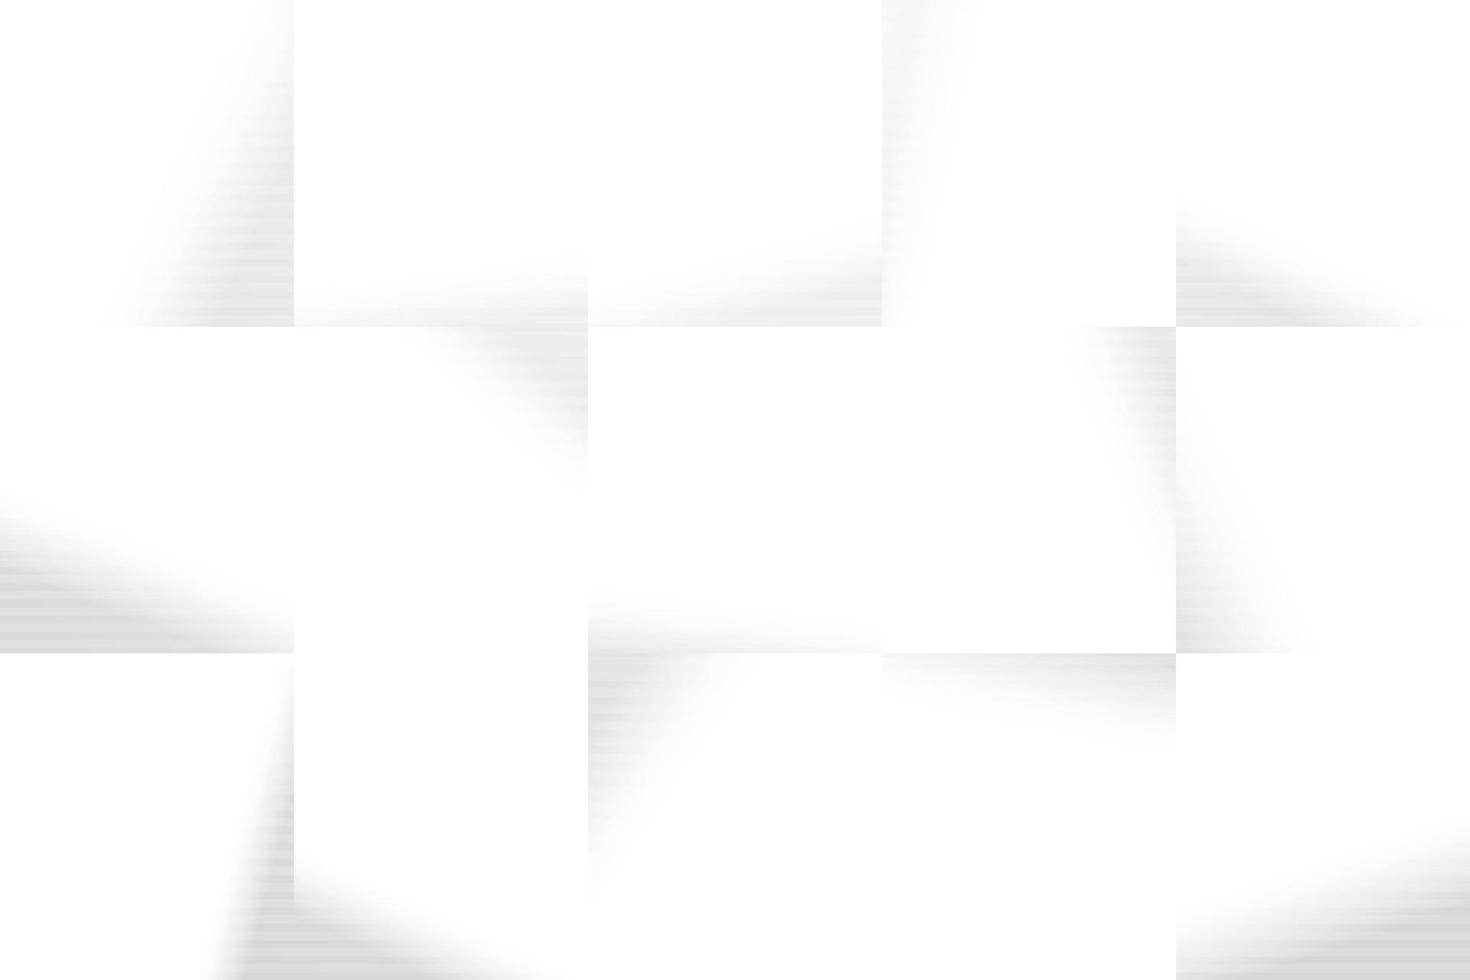 abstrato branco e cinzento cor, moderno Projeto gradiente fundo com geométrico retângulo forma. vetor ilustração.